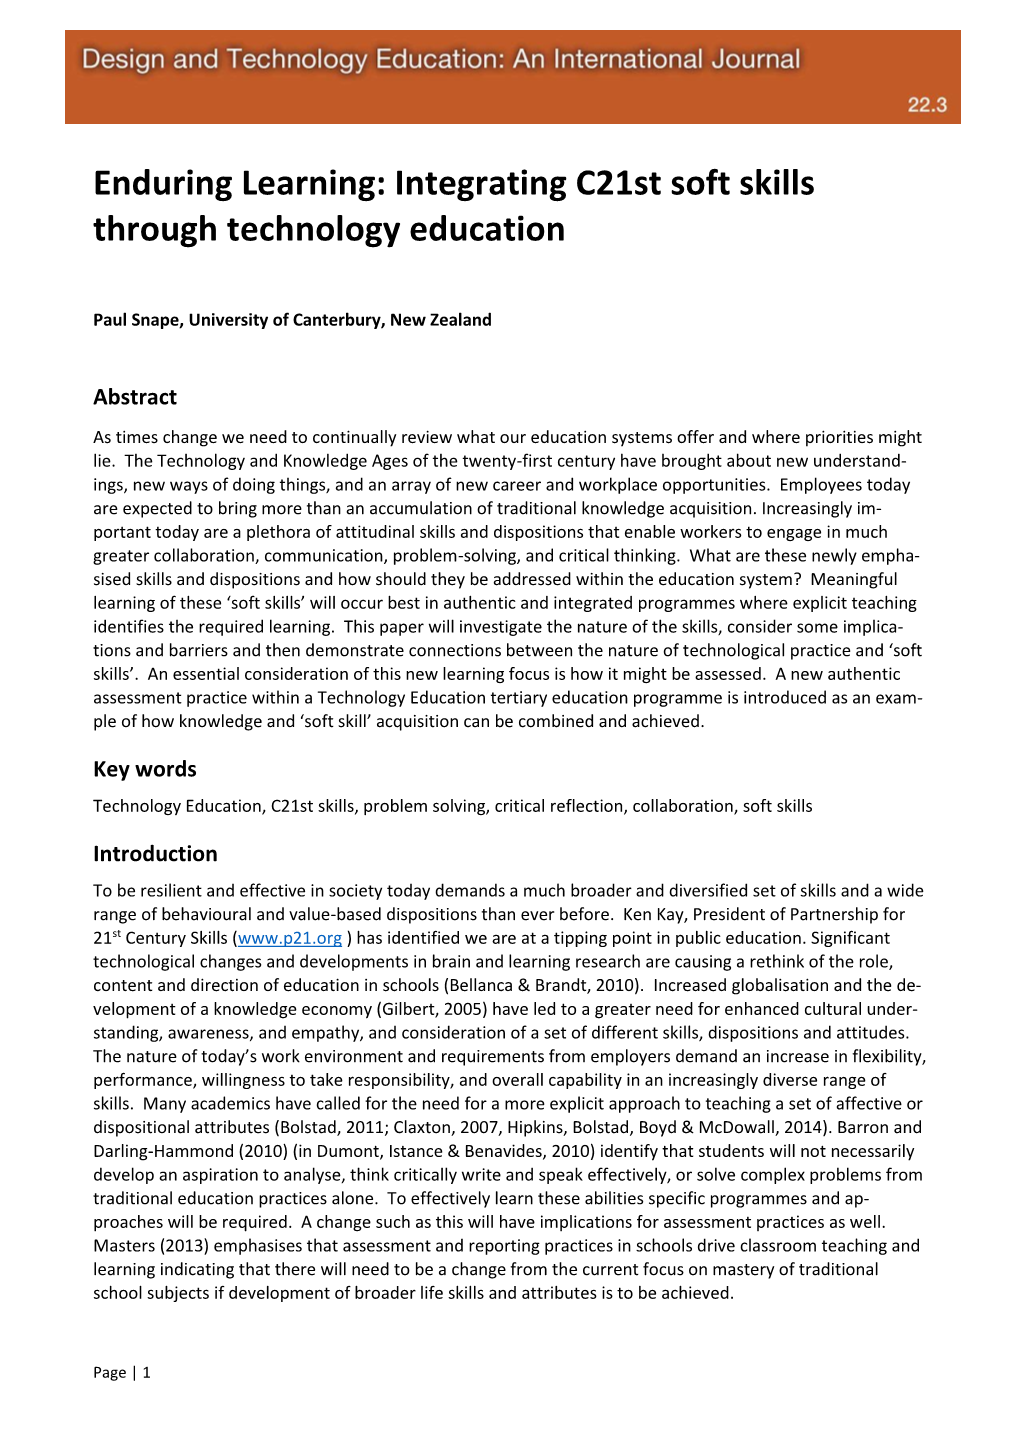 Enduring Learning: Integrating C21st Soft Skills Through Technology Education